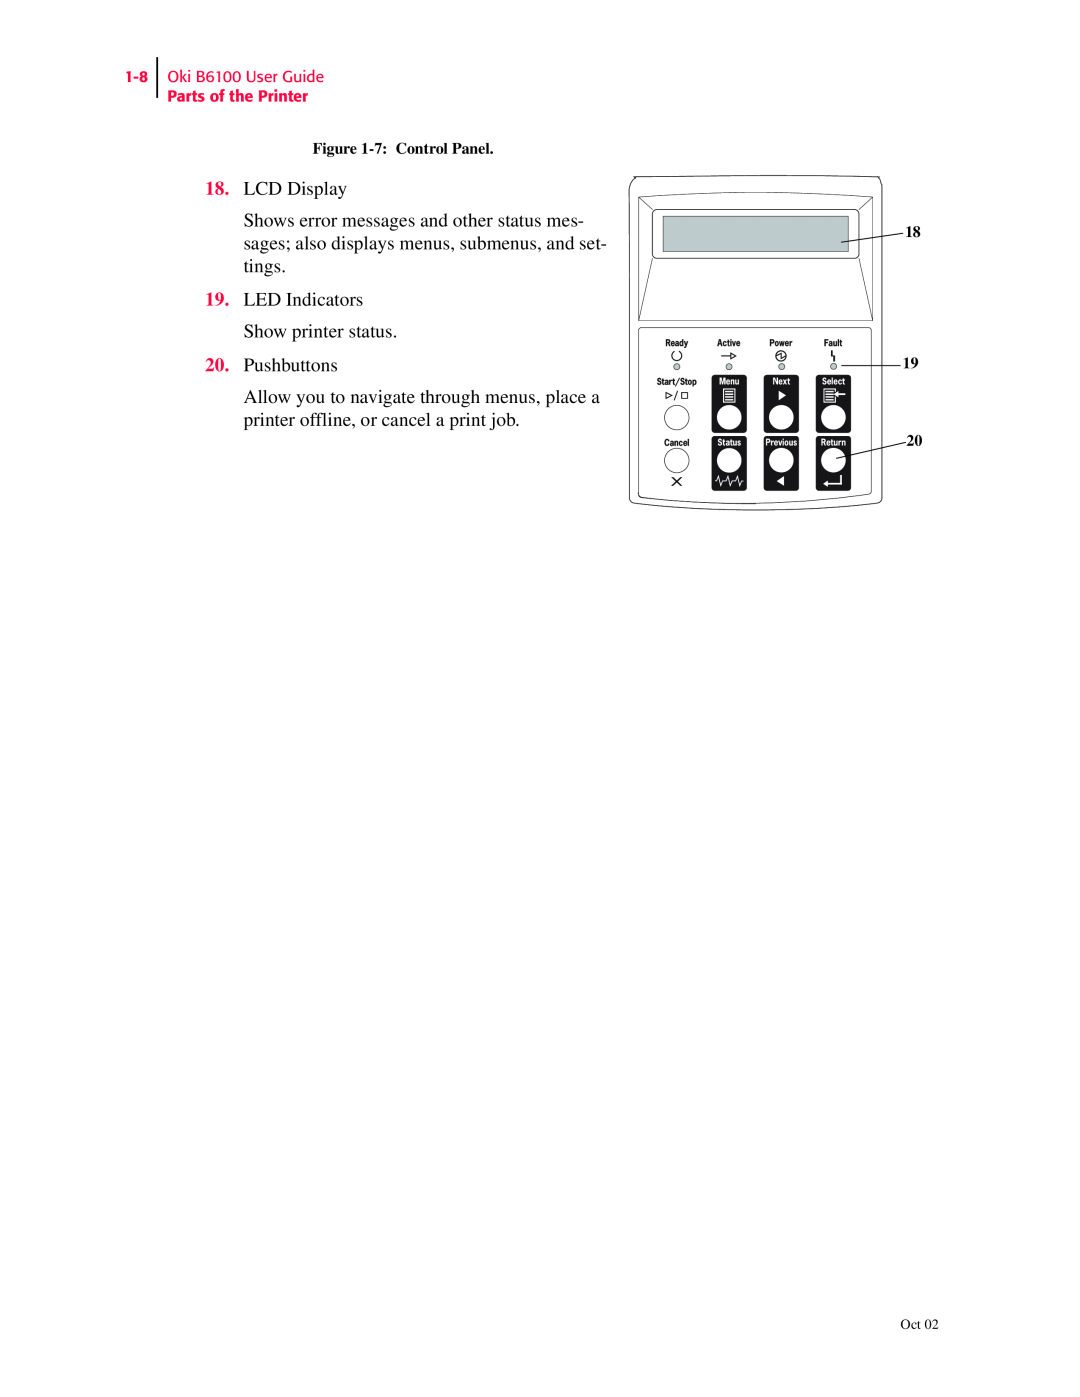 Oki manual LCD Display, LED Indicators Show printer status 20. Pushbuttons, Oki B6100 User Guide Parts of the Printer 